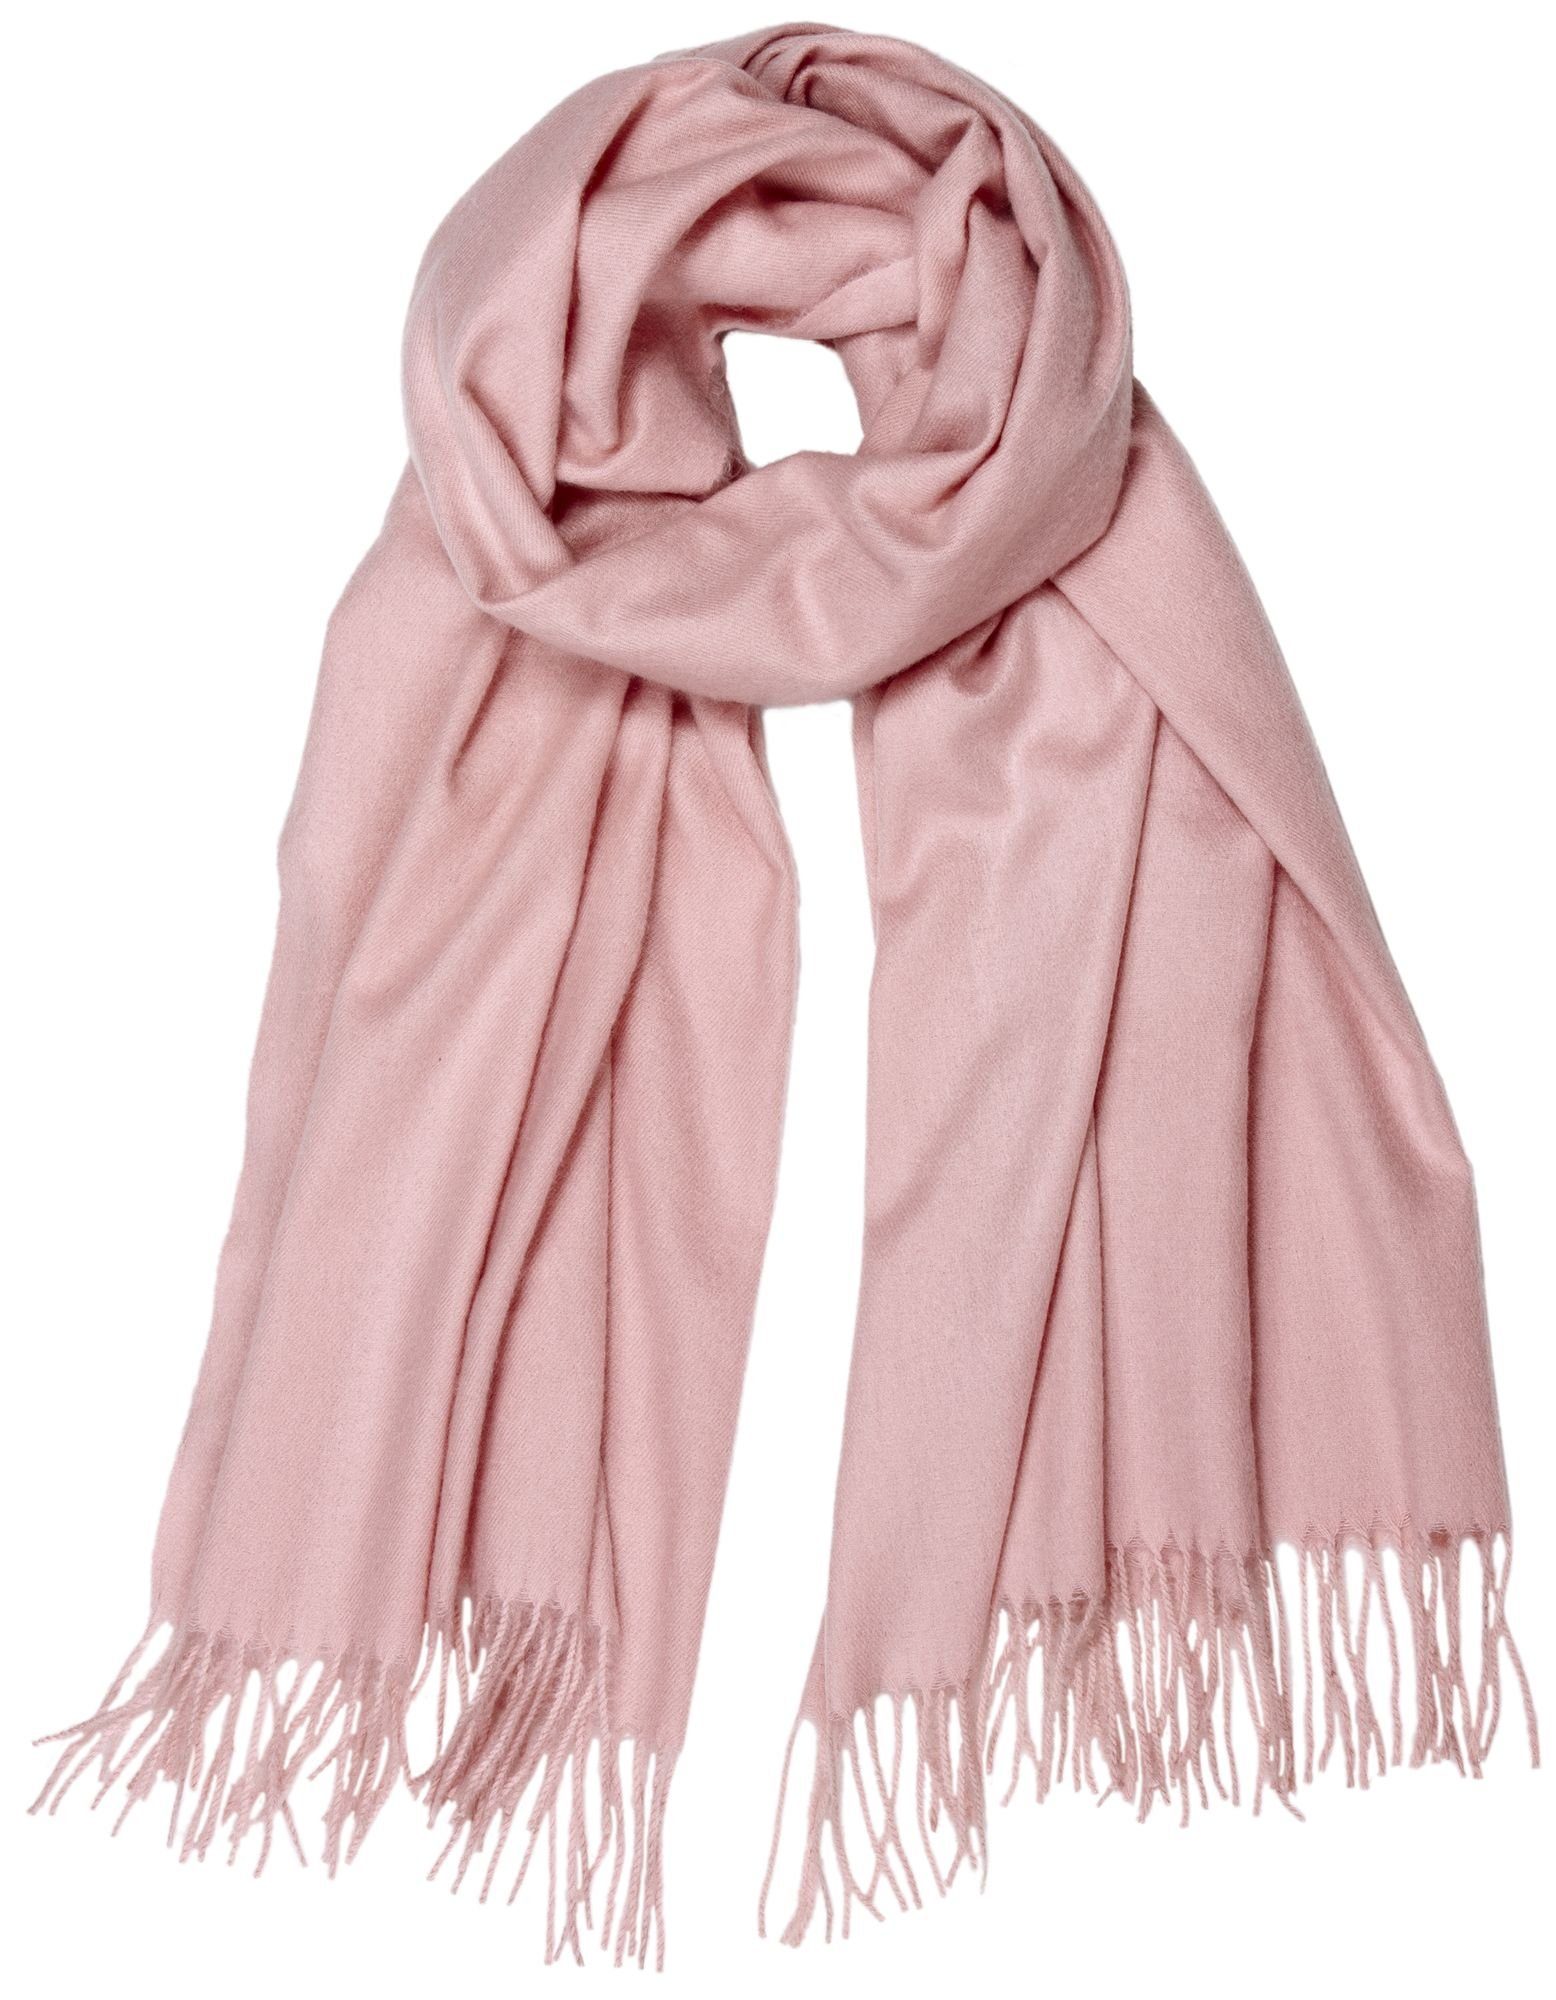 Caspar Modeschal SC506 weicher warmer Unisex XL Schal einfarbig rosa